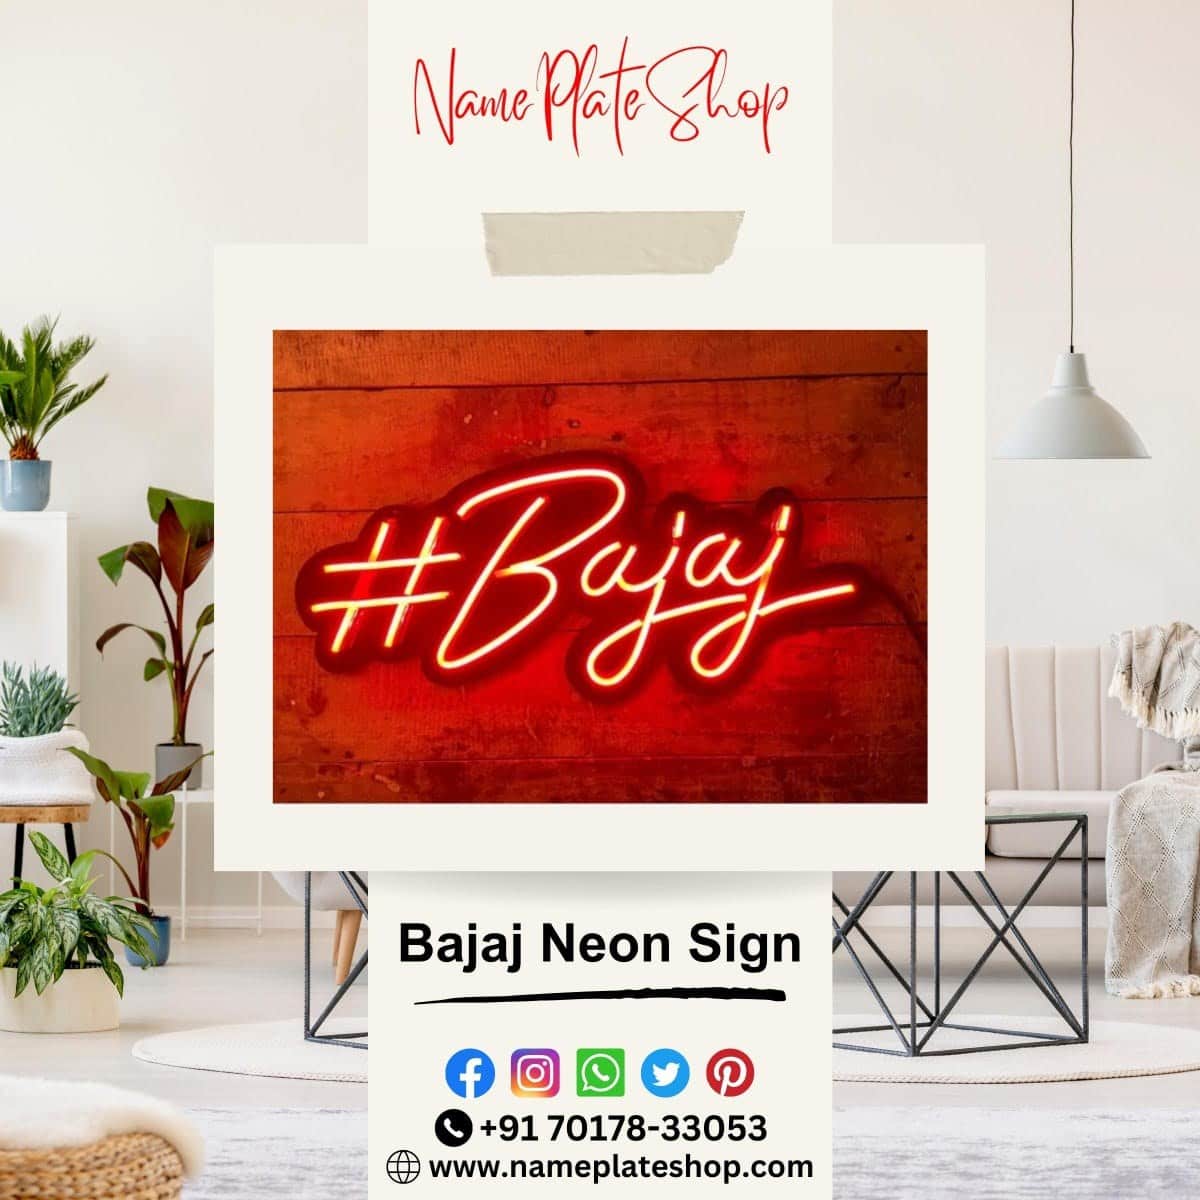 Bajaj Neon Sign Illuminate Your Space In Style